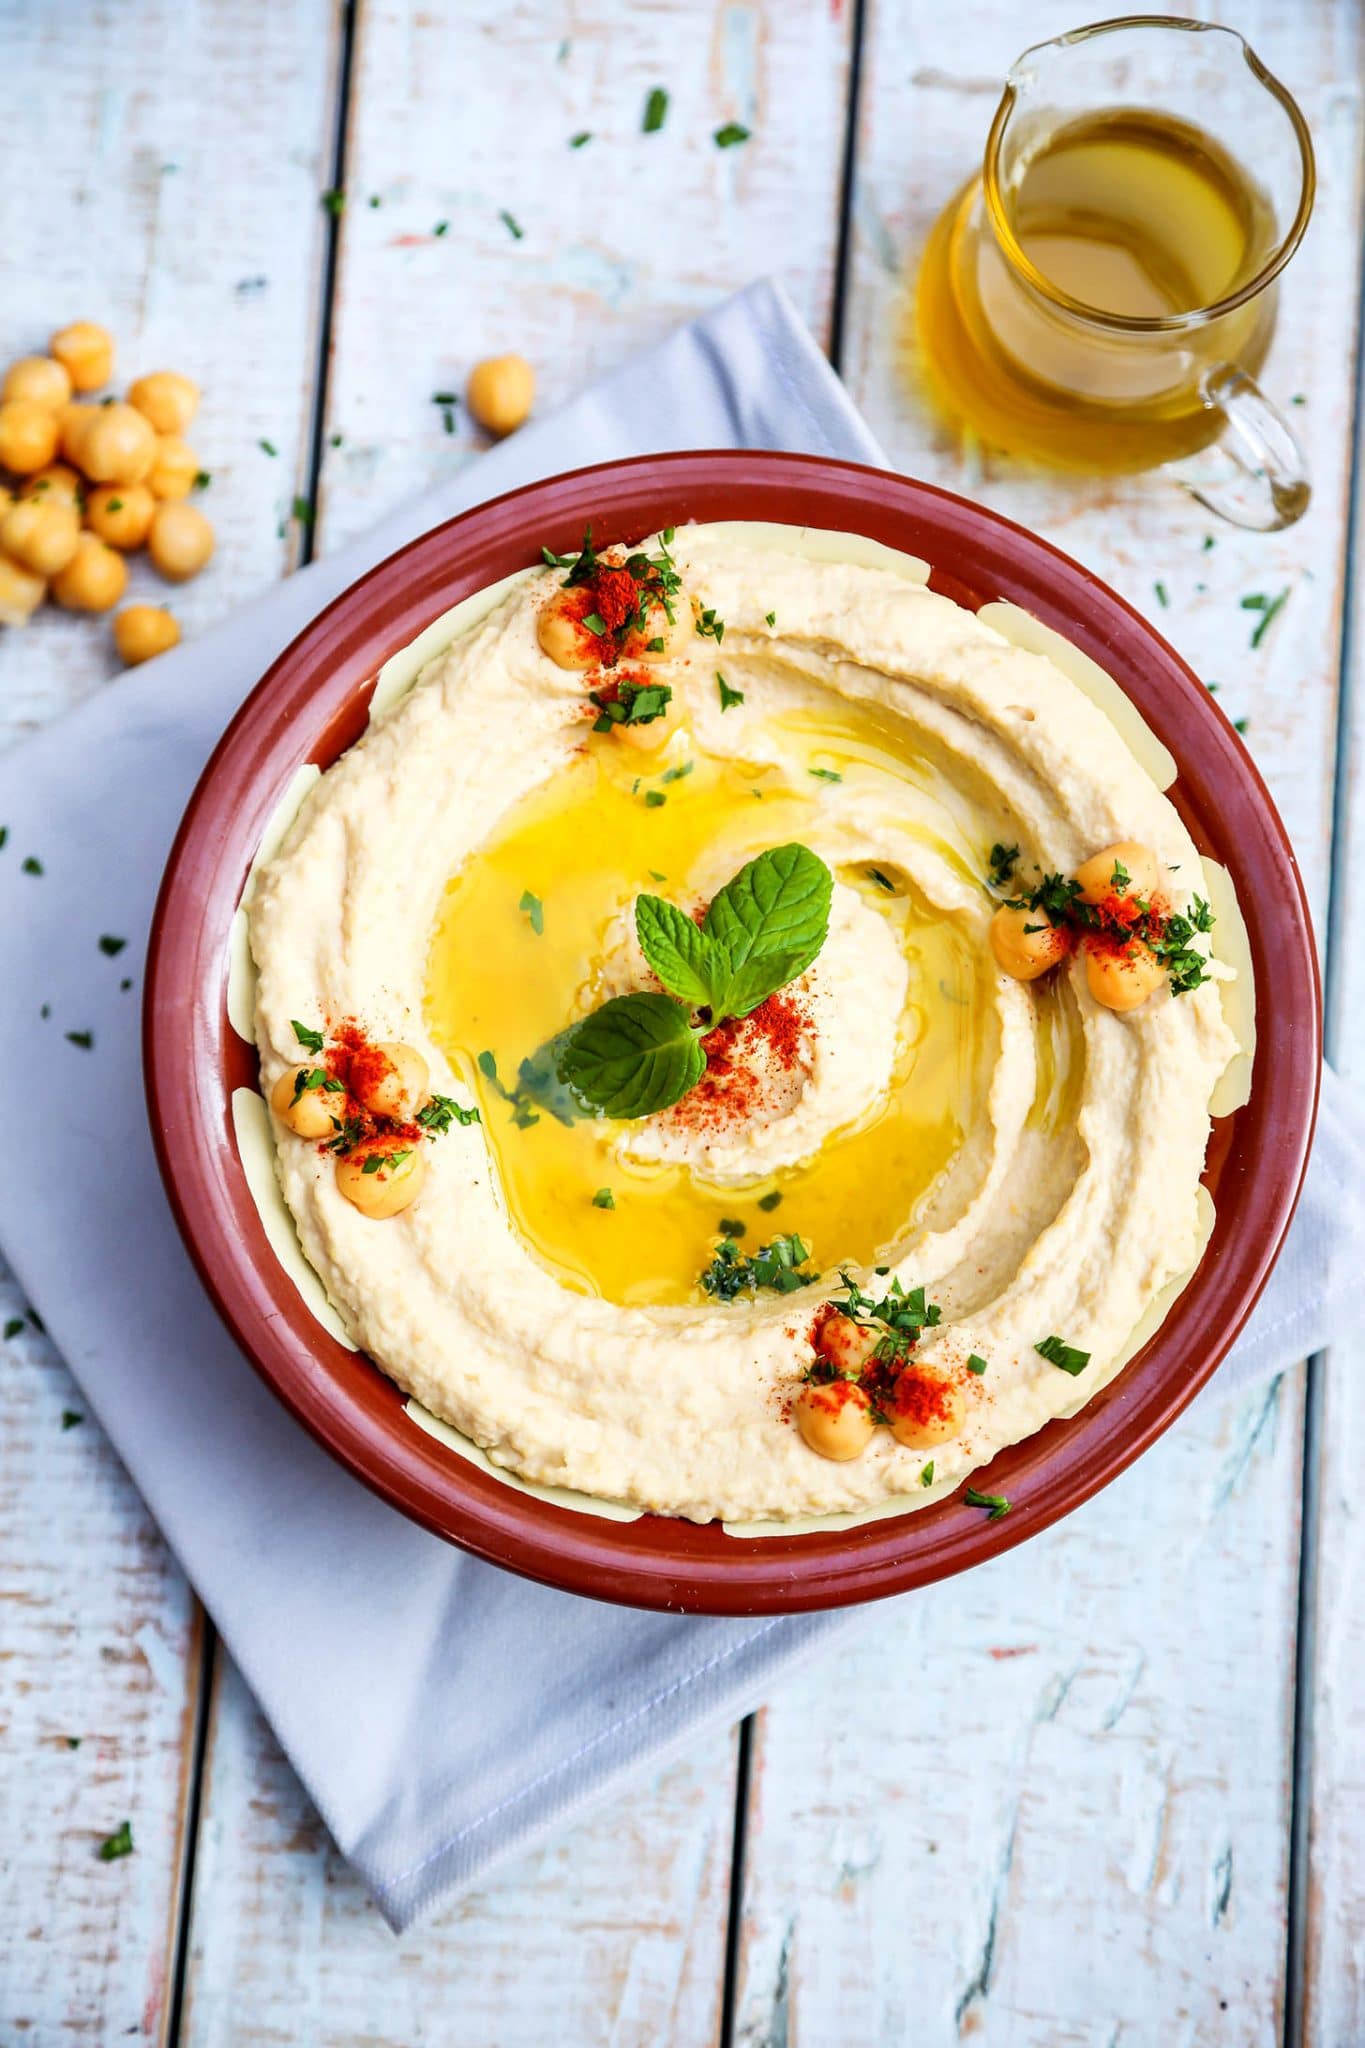 Hummus Recipe (The Traditional Tasty Way) - Chef Tariq